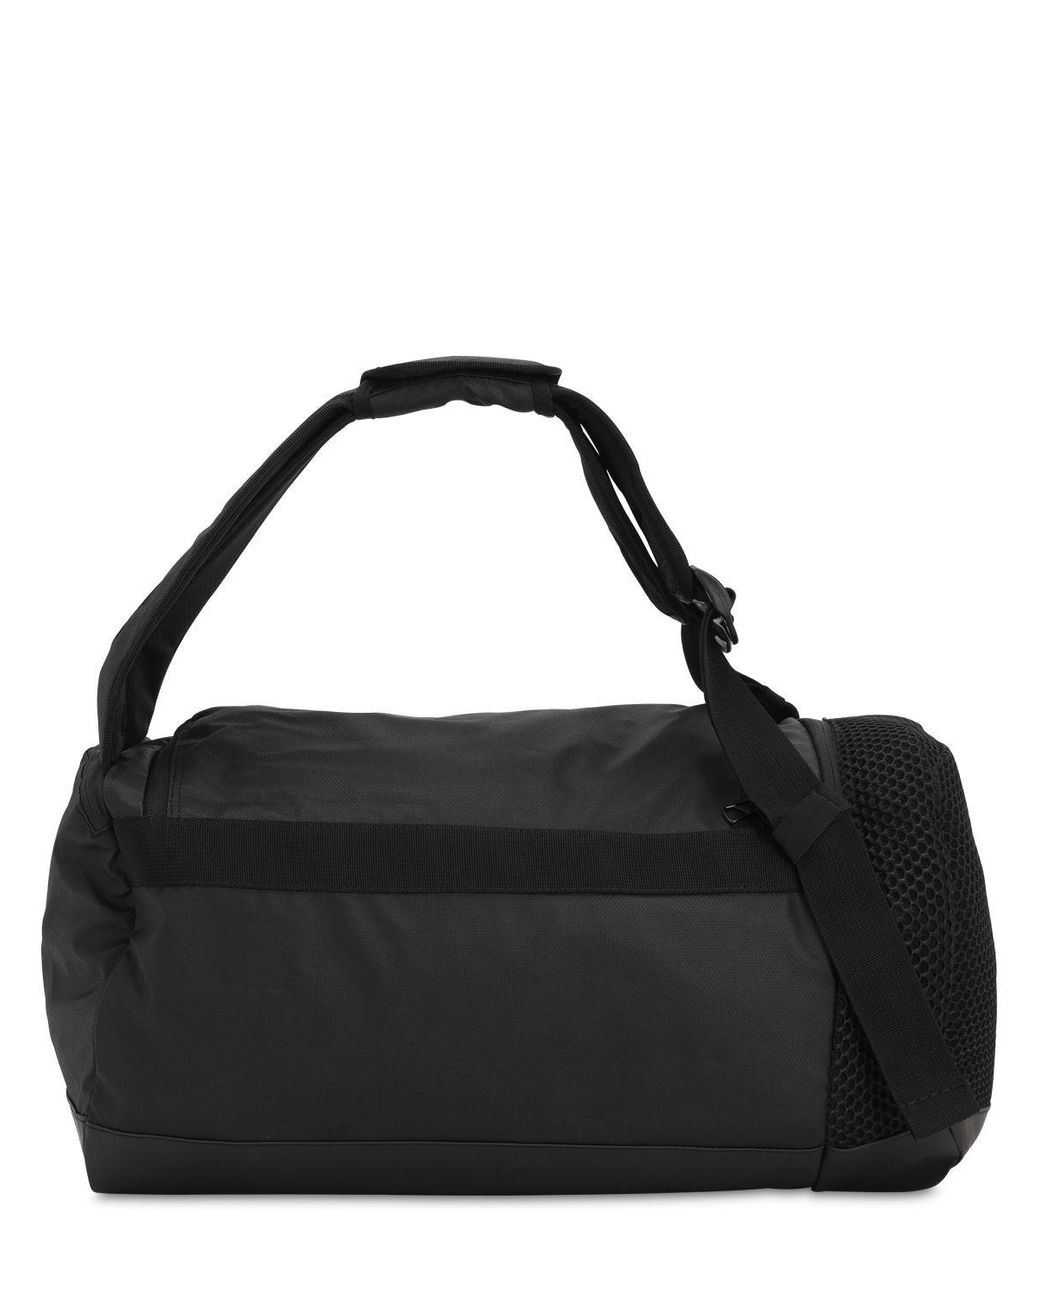 adidas Originals 4athlts Id Duffel Bag Small in Black for Men | Lyst